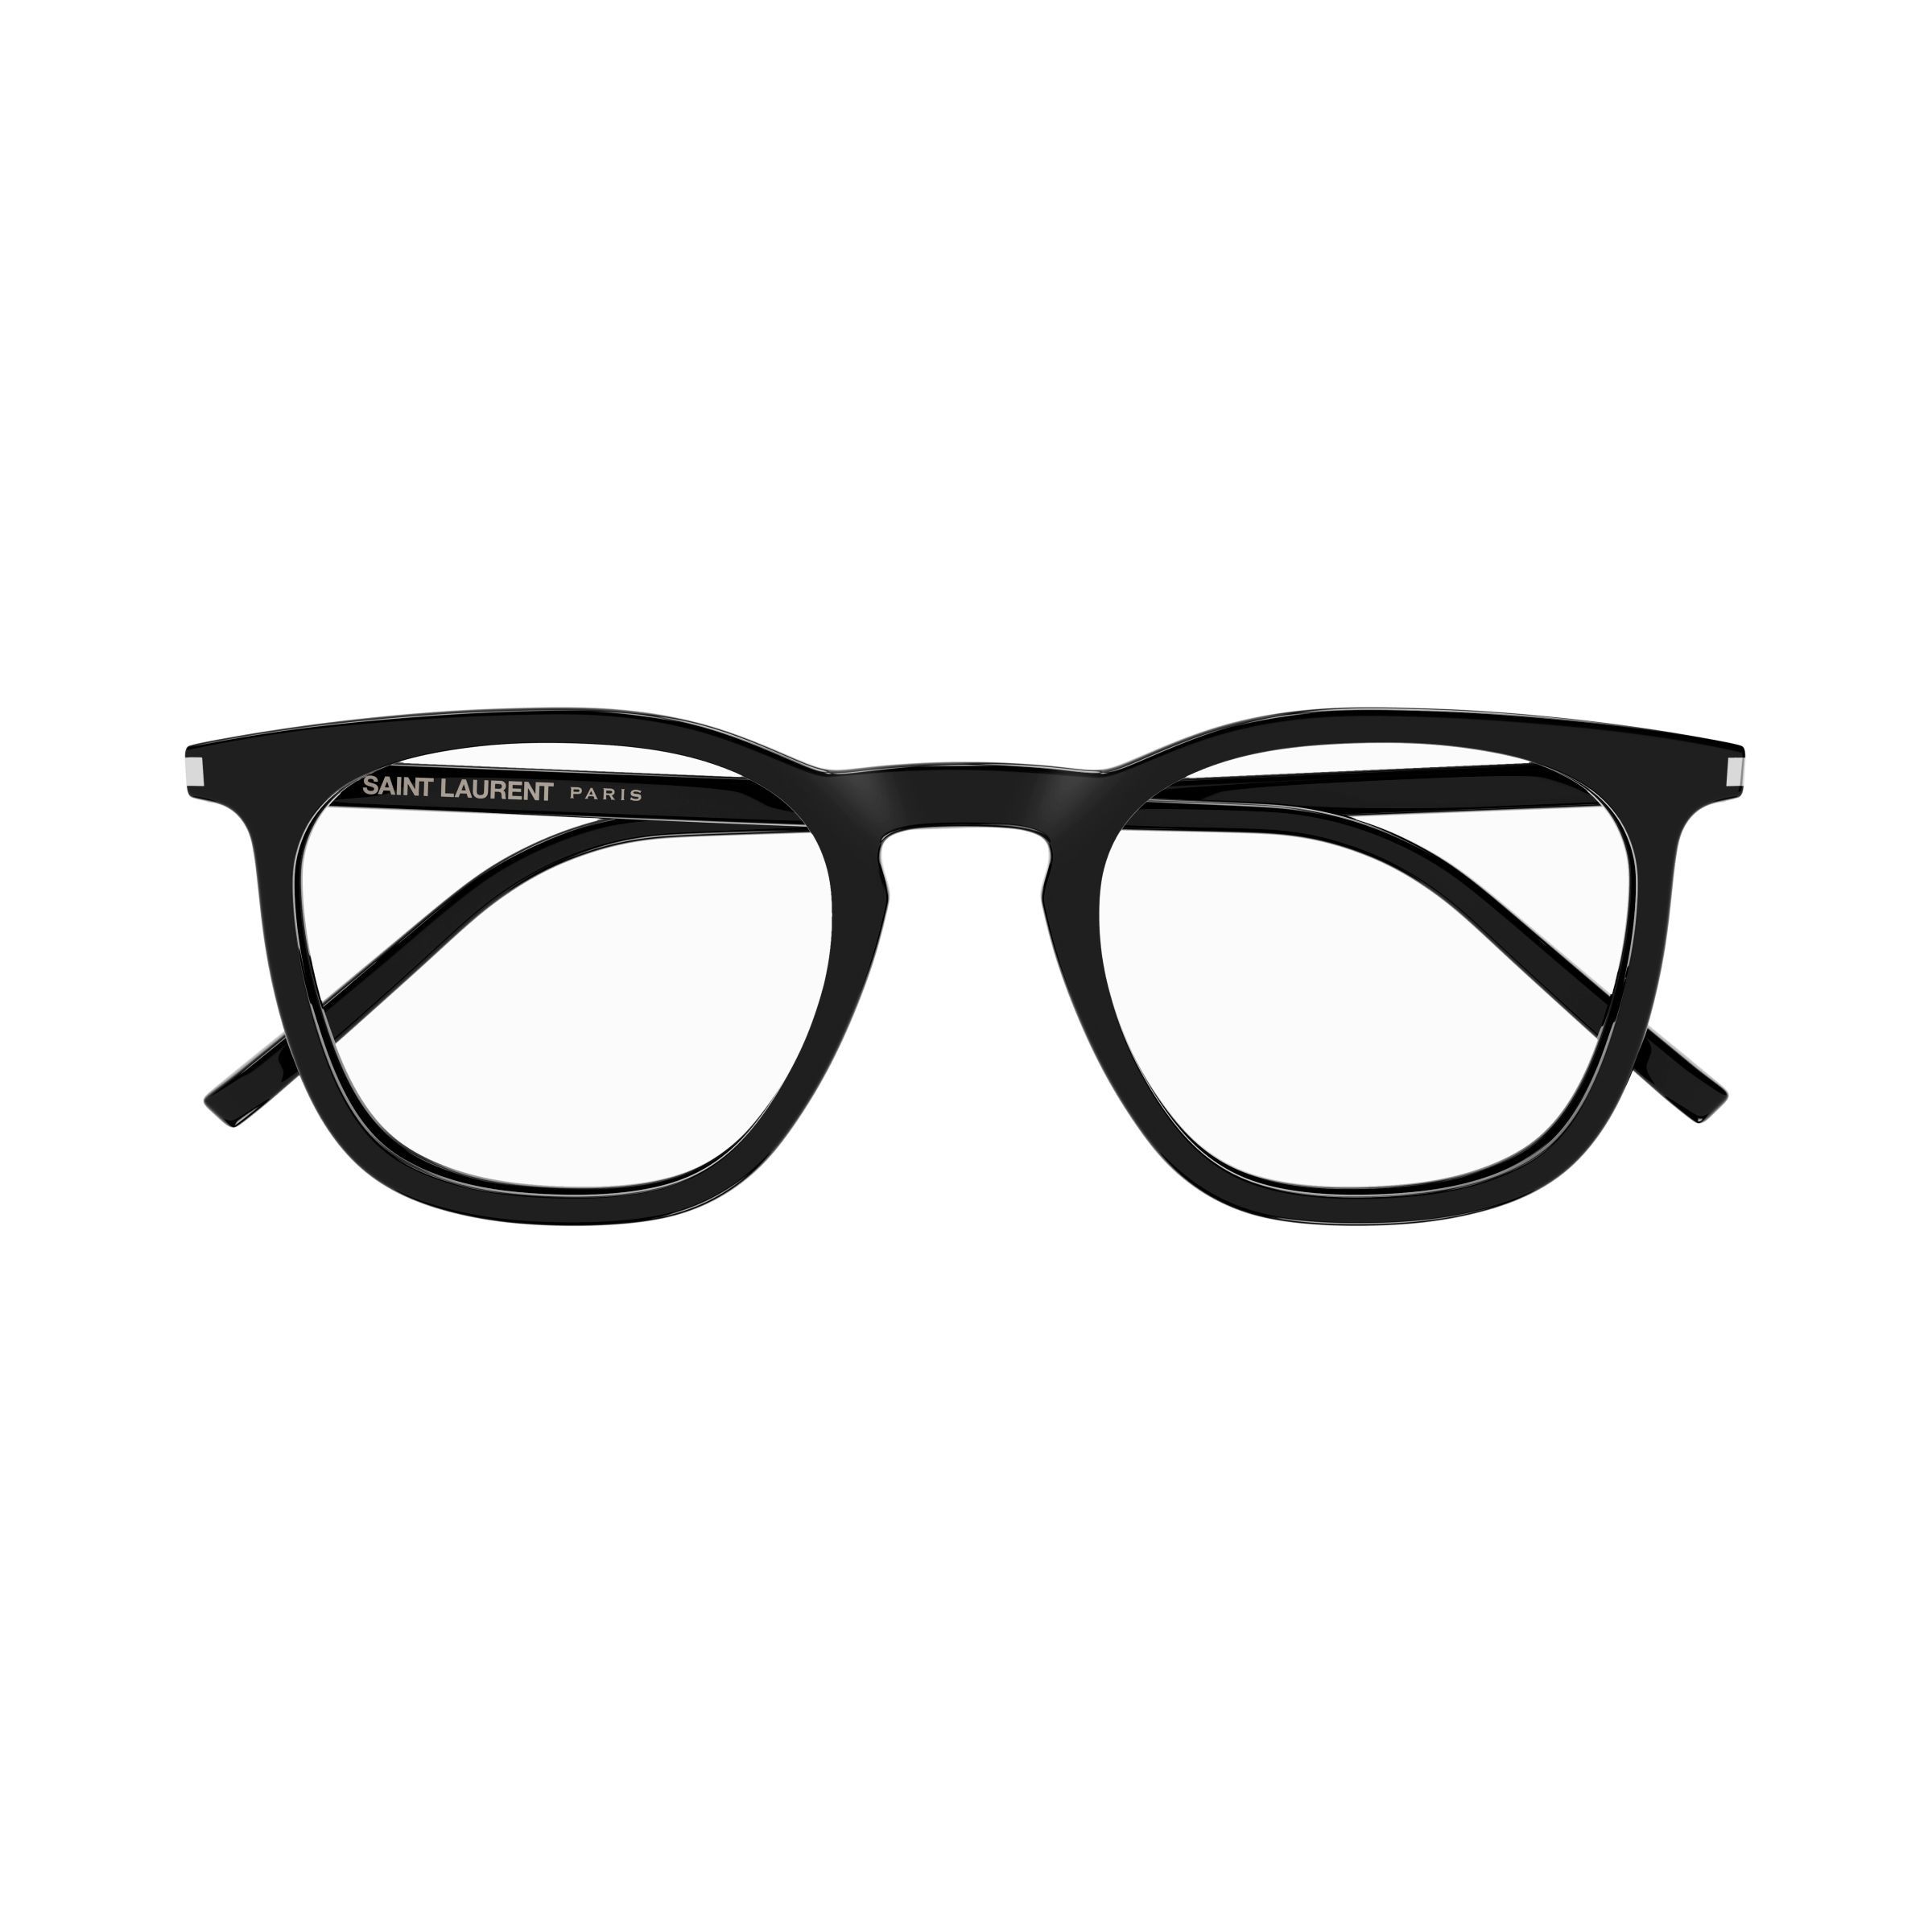 SL 623 Panthos Eyeglasses  001 - size 49